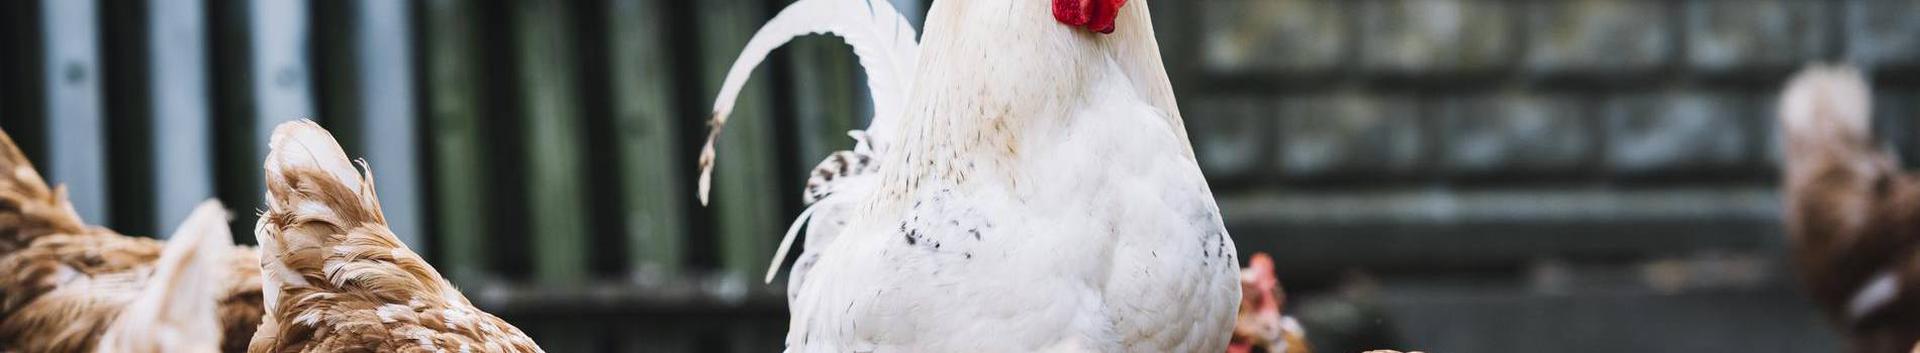 poultry production, farm animals